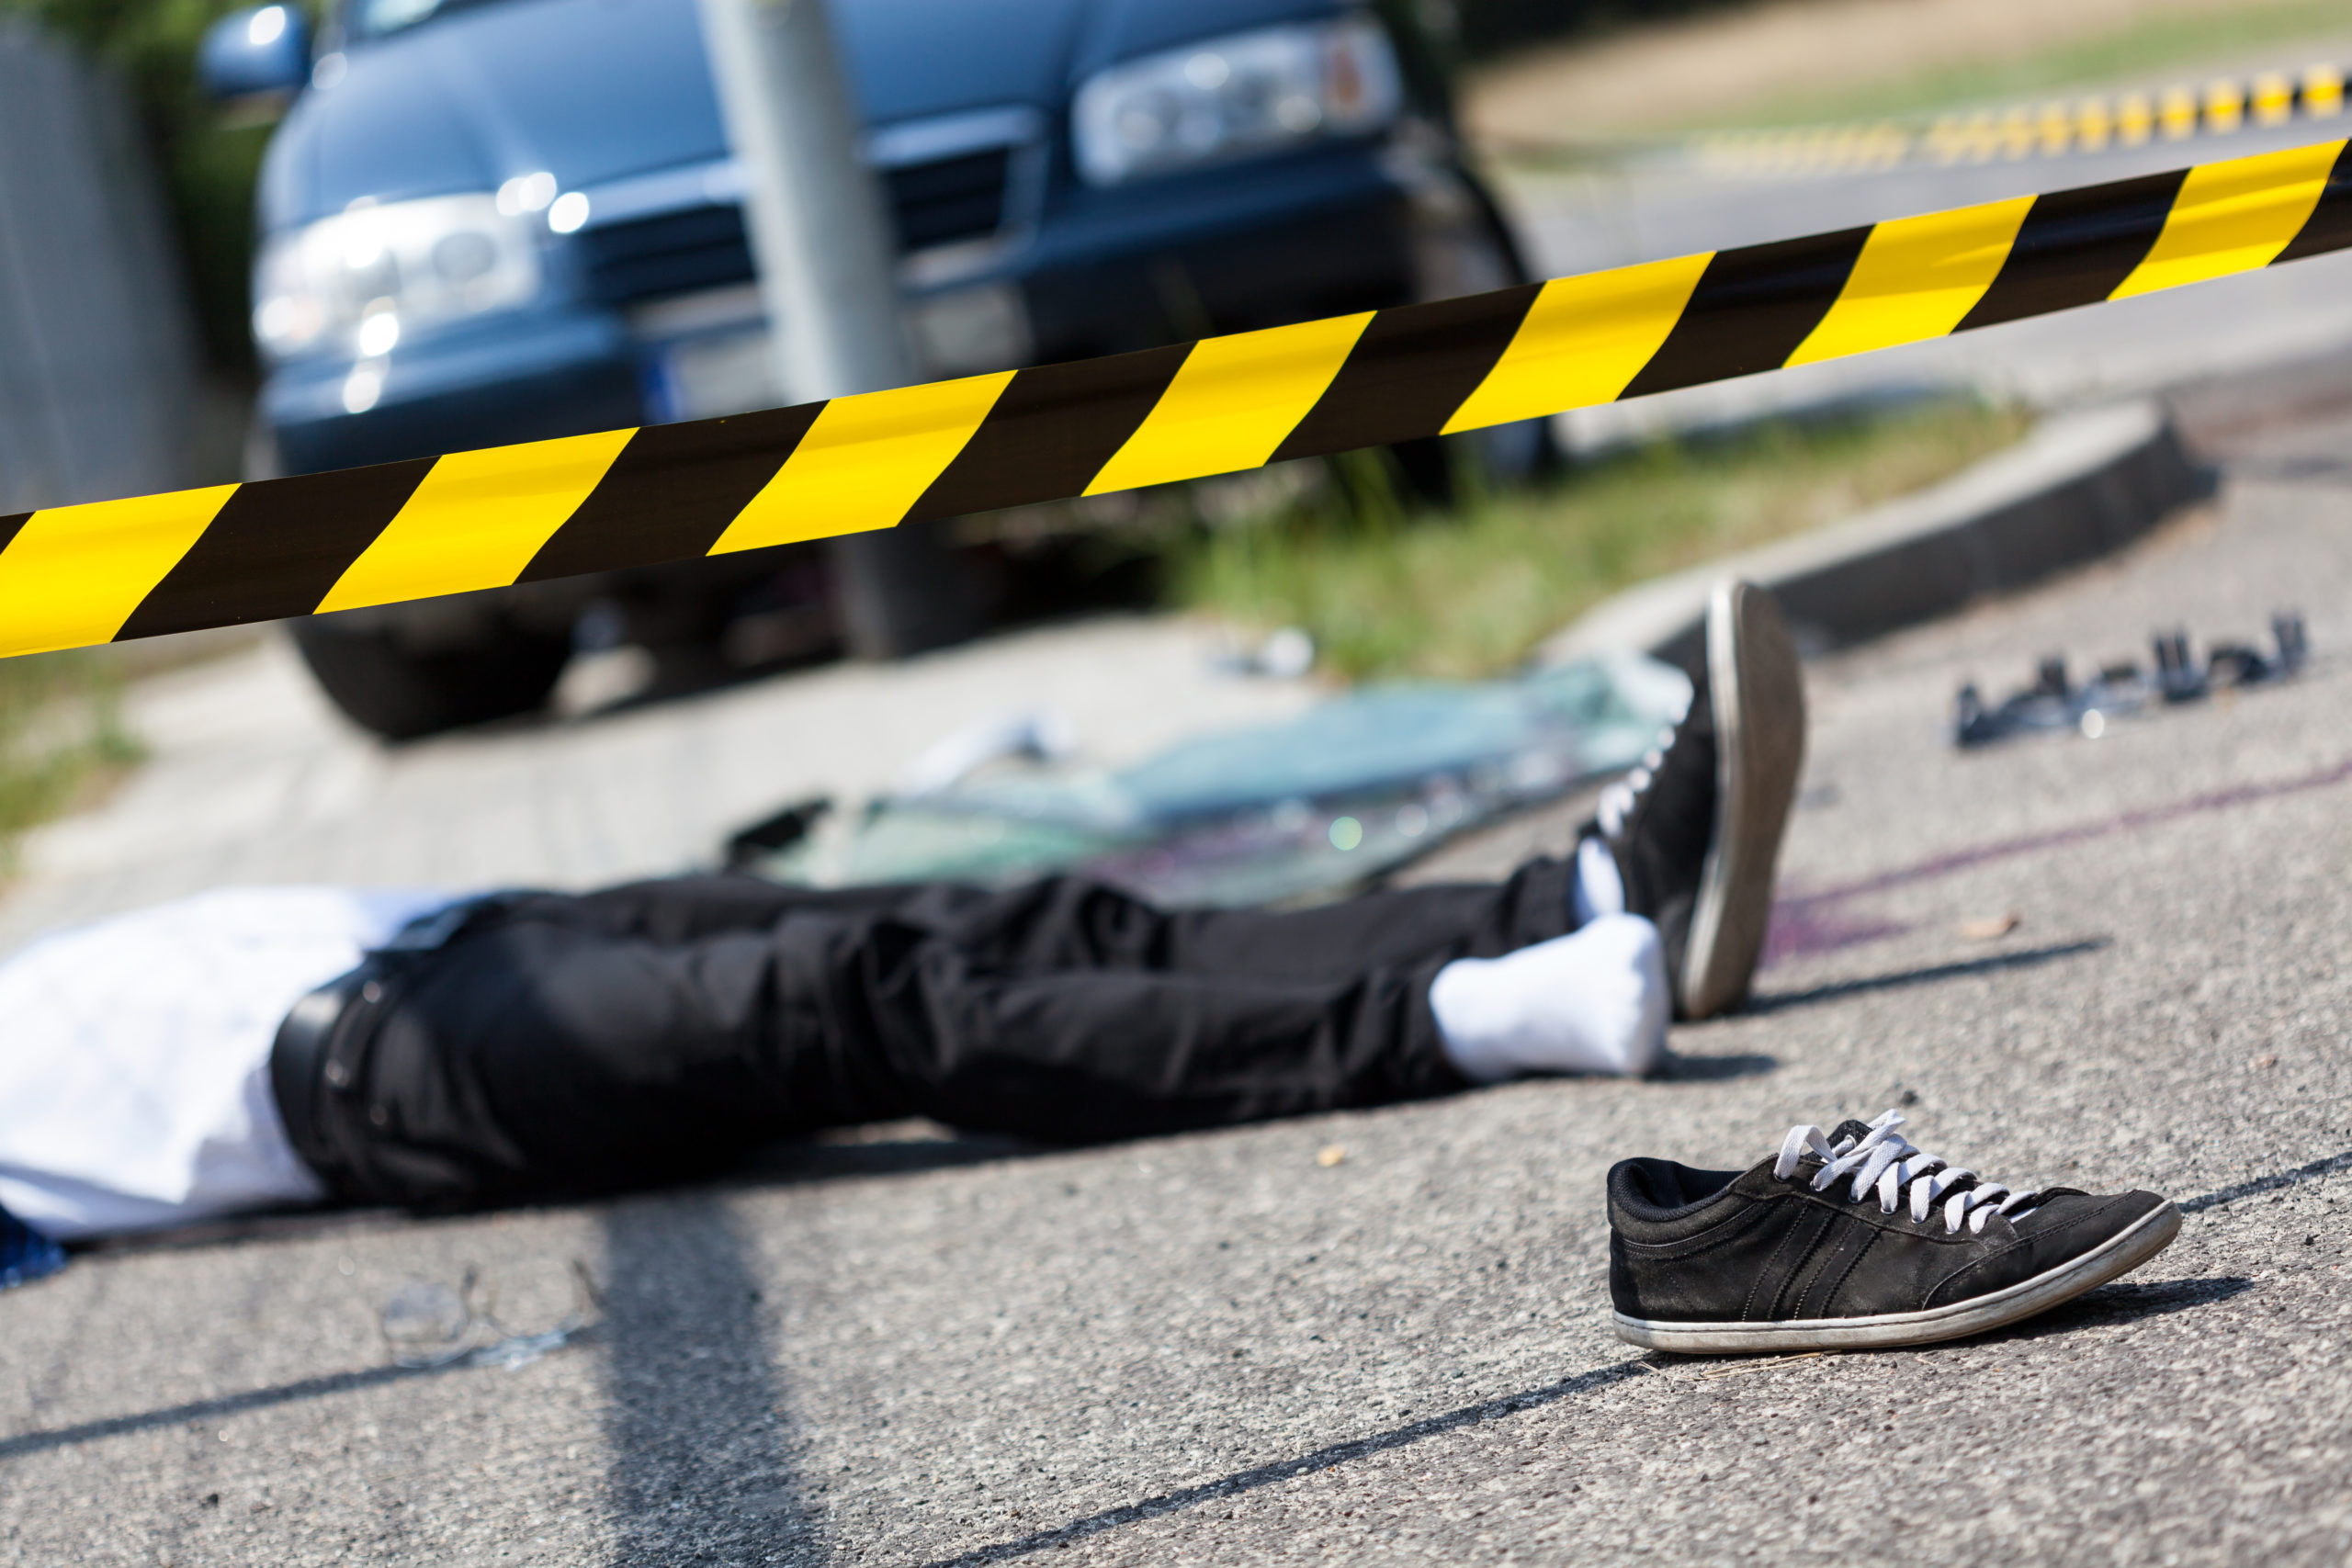 Surrey: Pedestrian died in collision involving a garbage truck